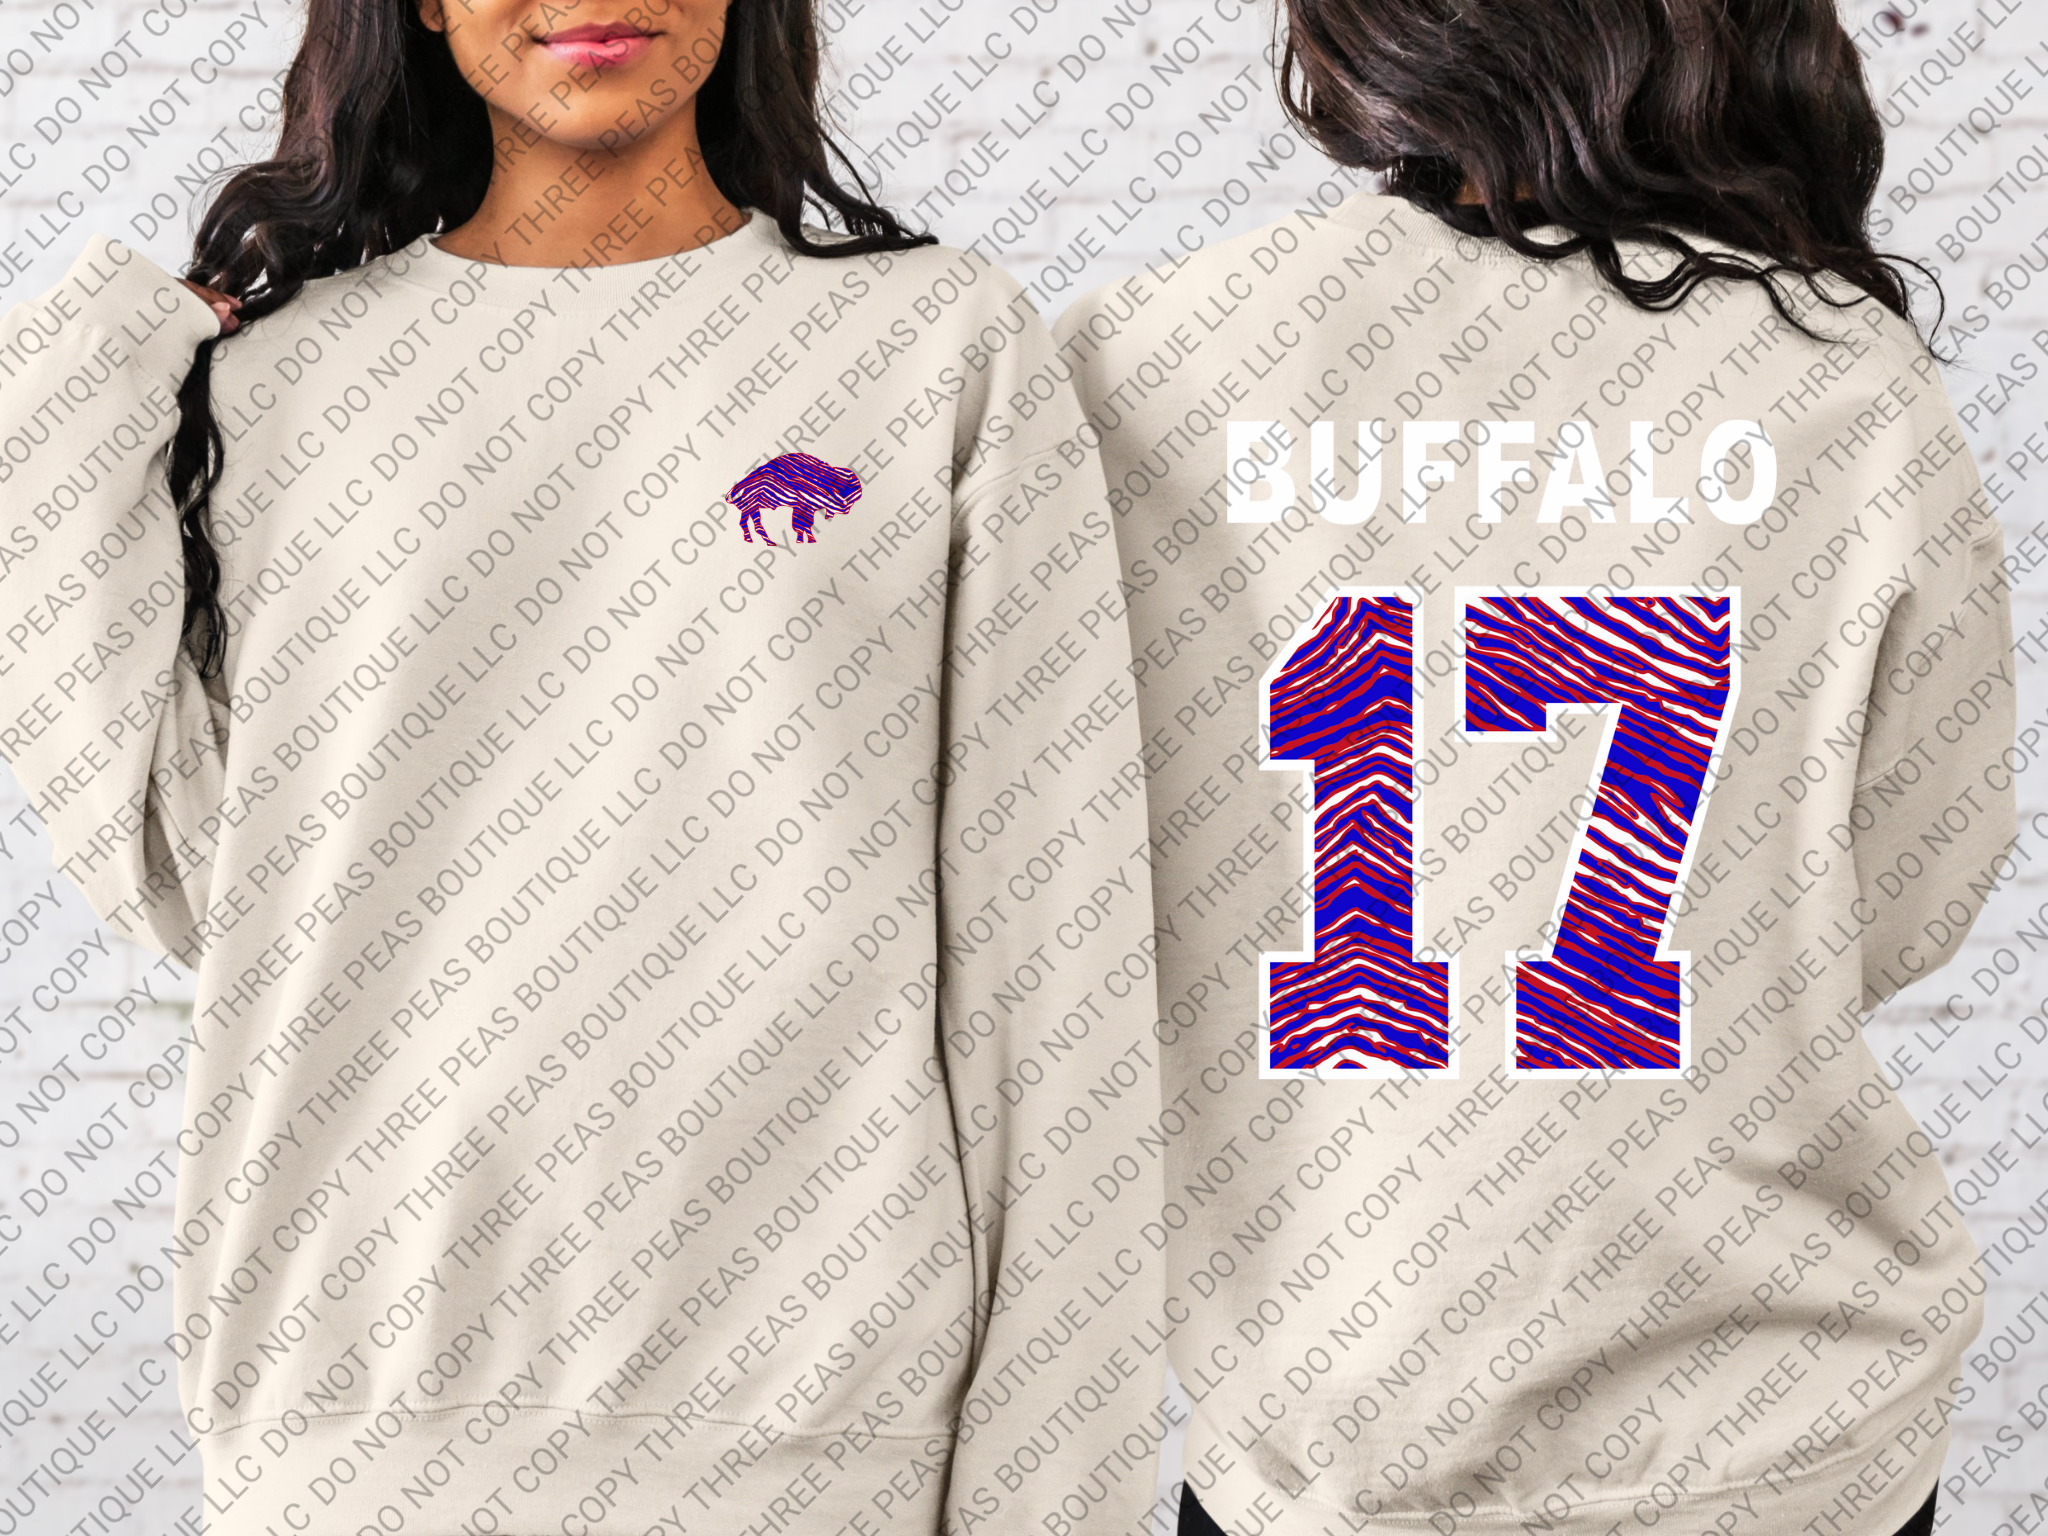 Buffalo 17